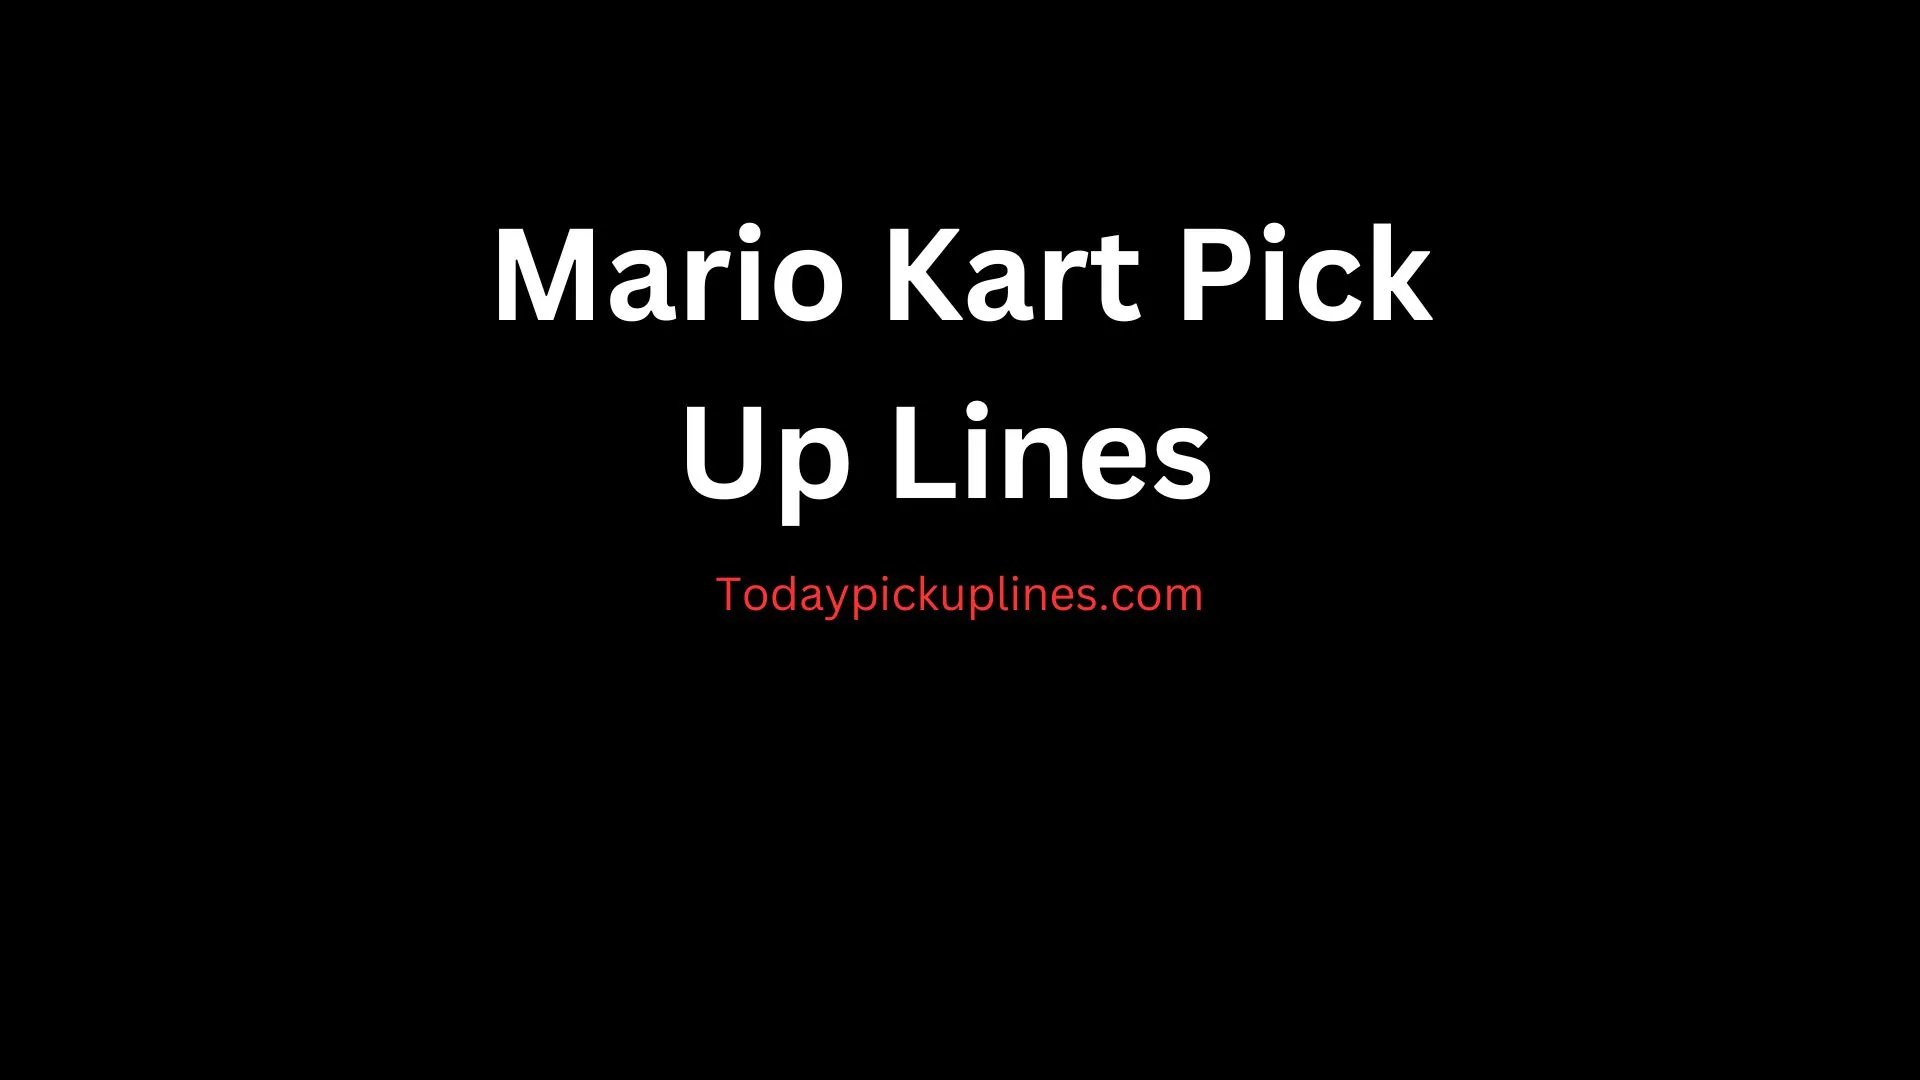 Mario Kart Pick Up Lines